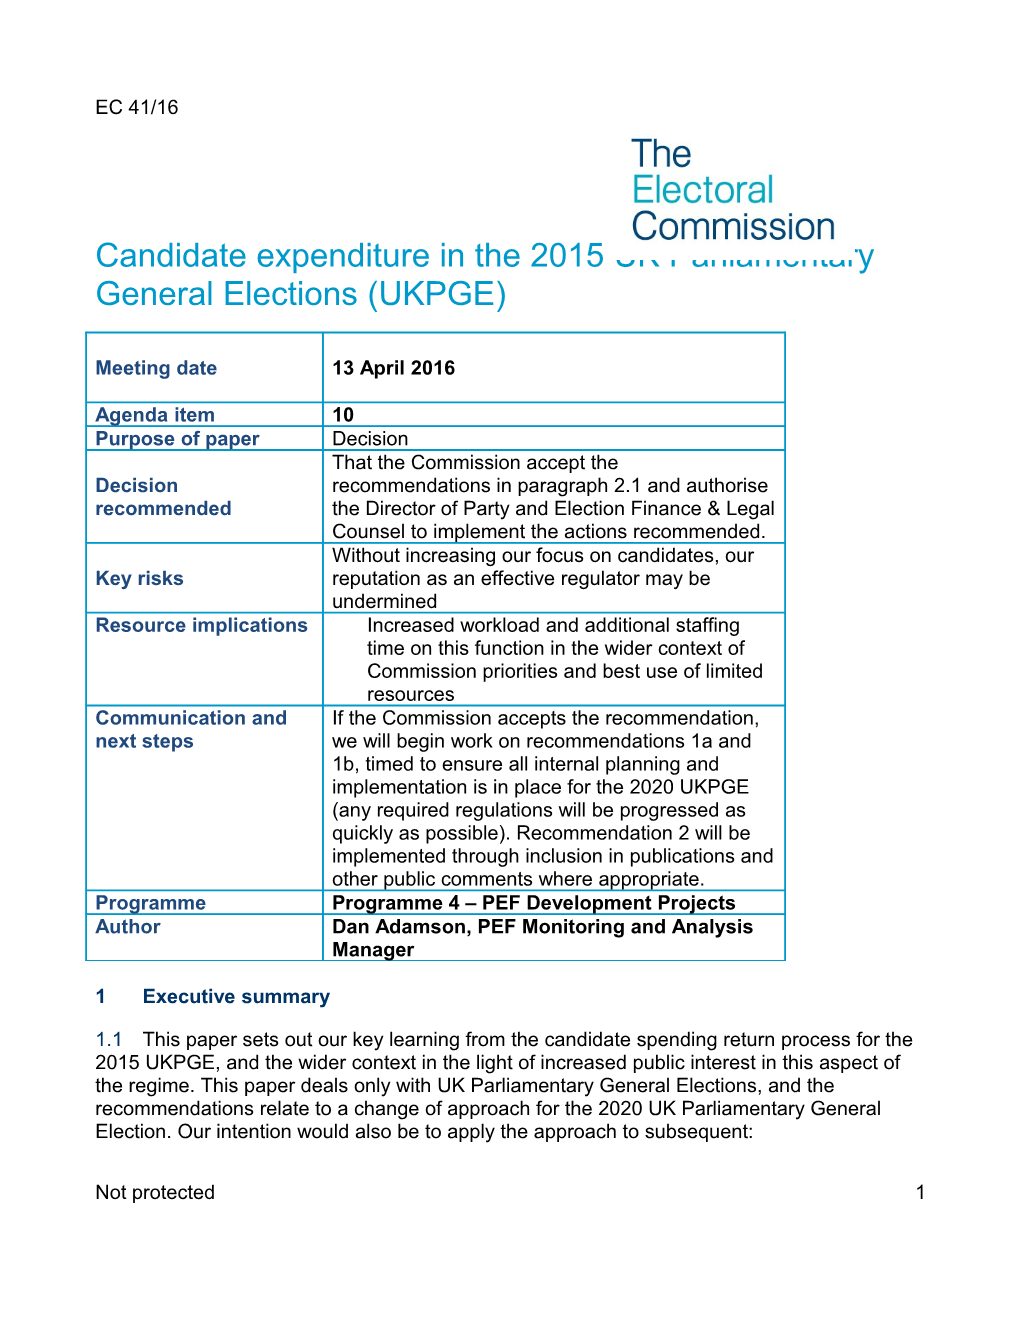 2016-04-13 EC 41 16 - Candidate Expenditure in the 2015 UKPGE